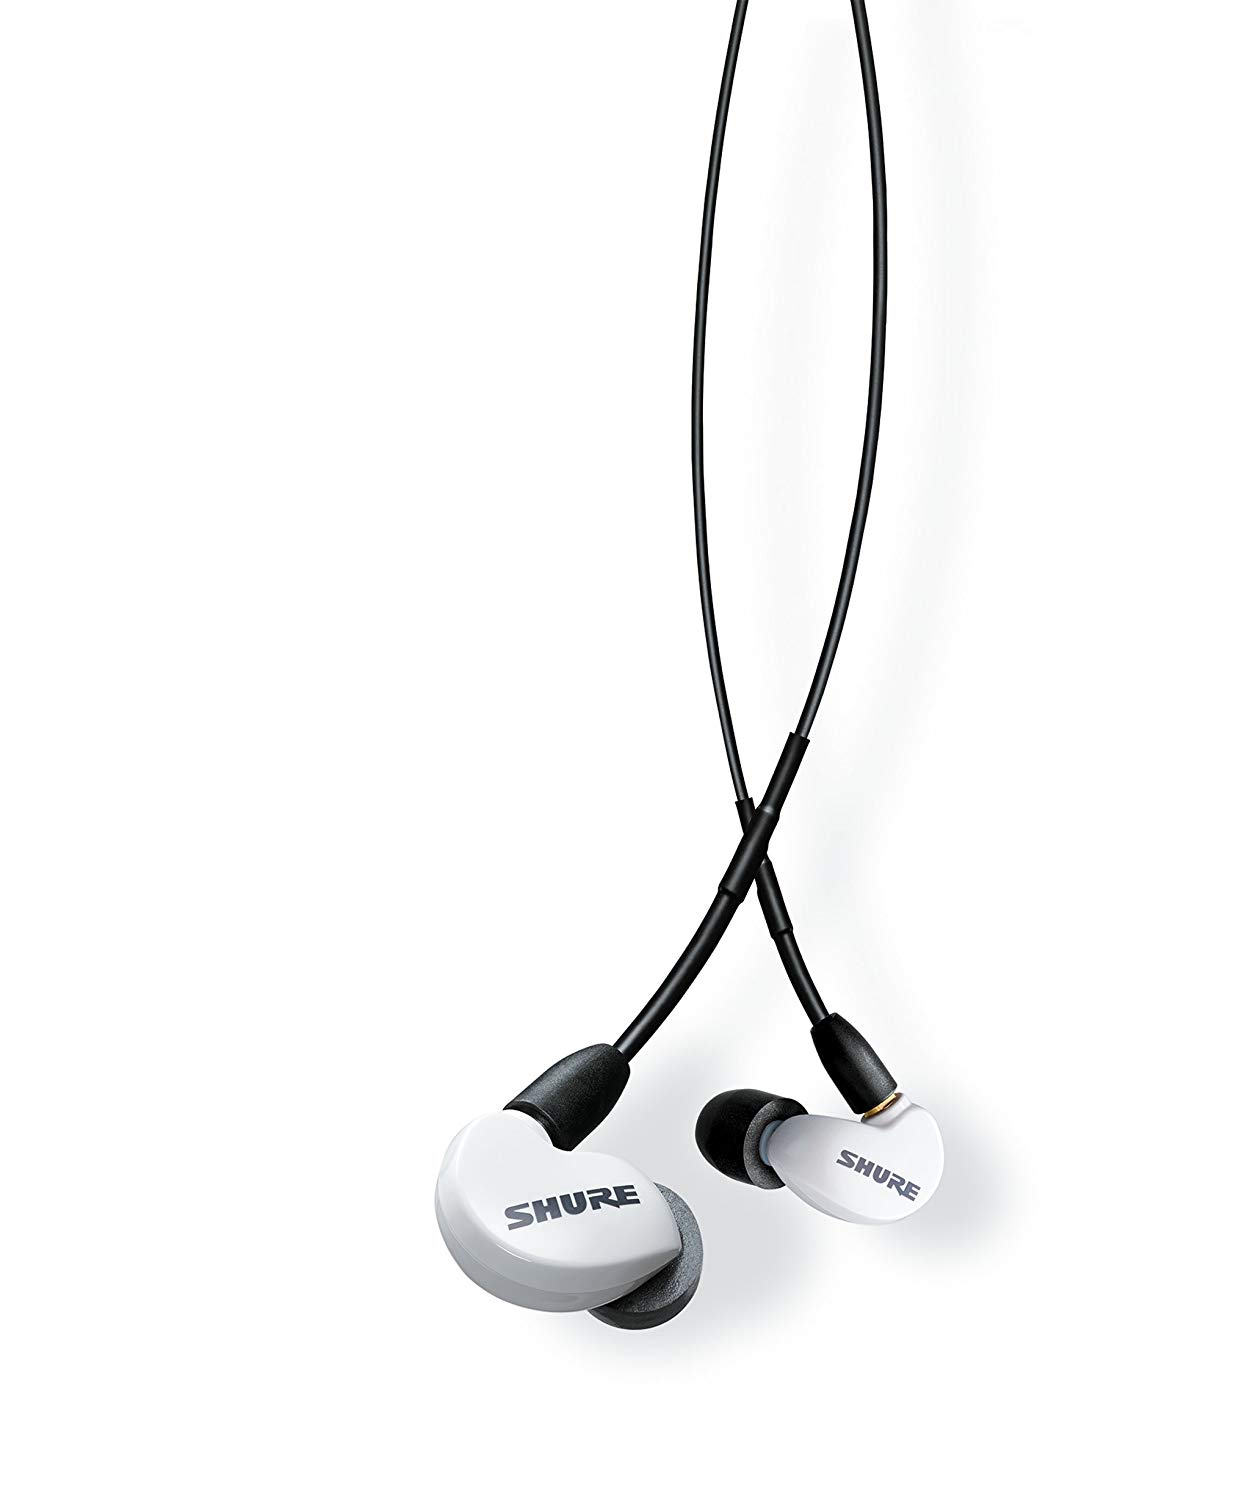  SE215SPE-W-UNI-EFS - אוזניות בצבע לבן, מהסדרה SE החדשה למוניטורים ולנגנים ניידים עם כבל ניתק. הכבל כולל מיקרופון.***יוצא מהמגוון***